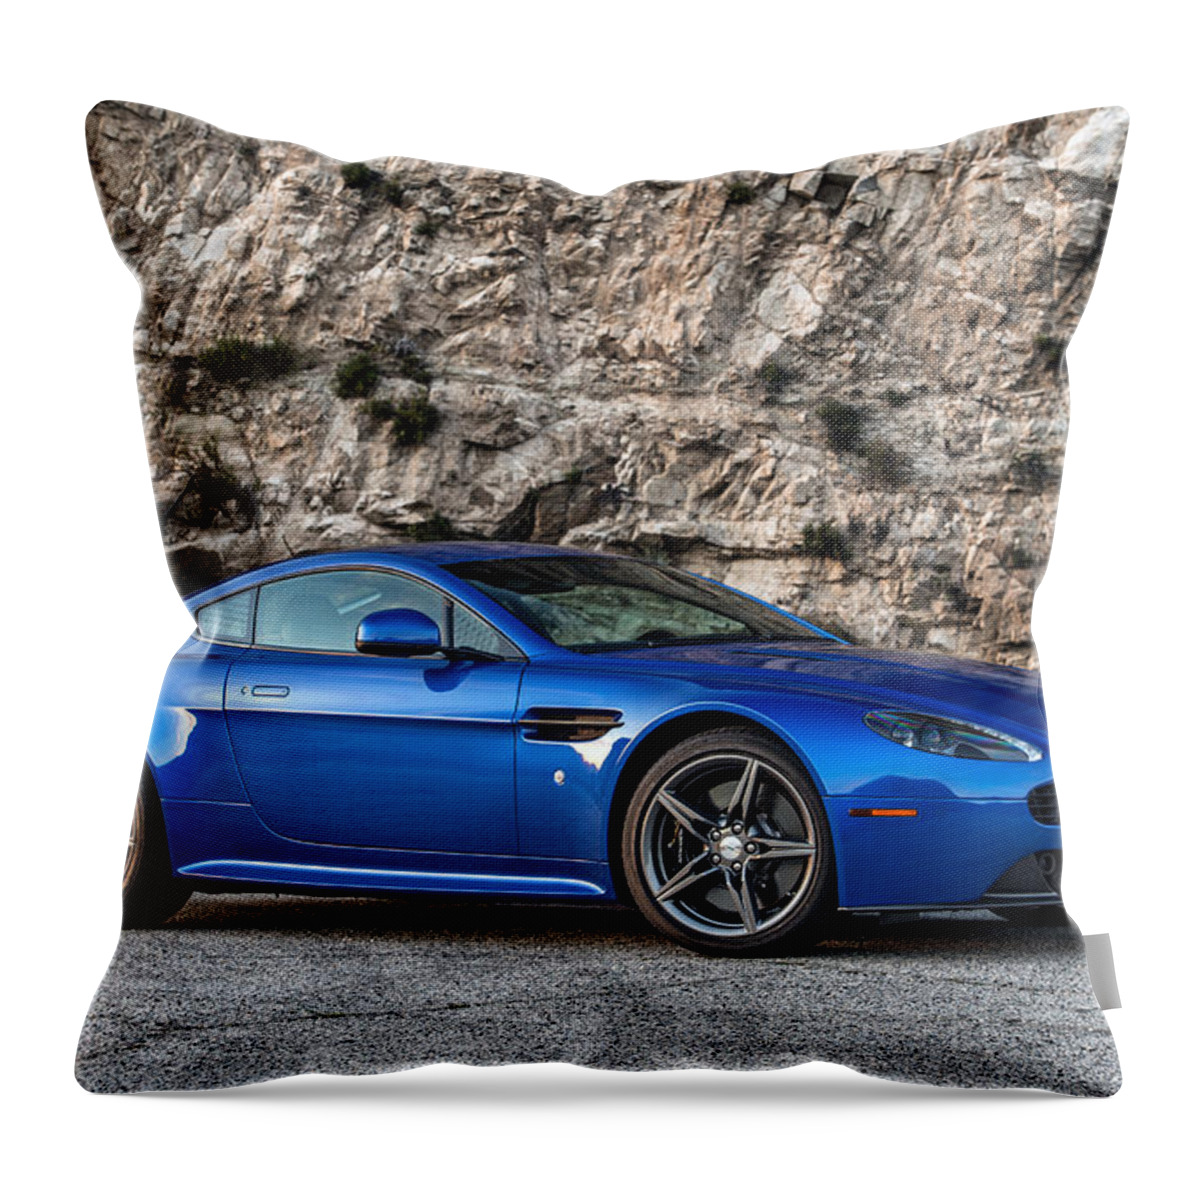 Aston Martin Vantage Throw Pillow featuring the digital art Aston Martin Vantage by Super Lovely